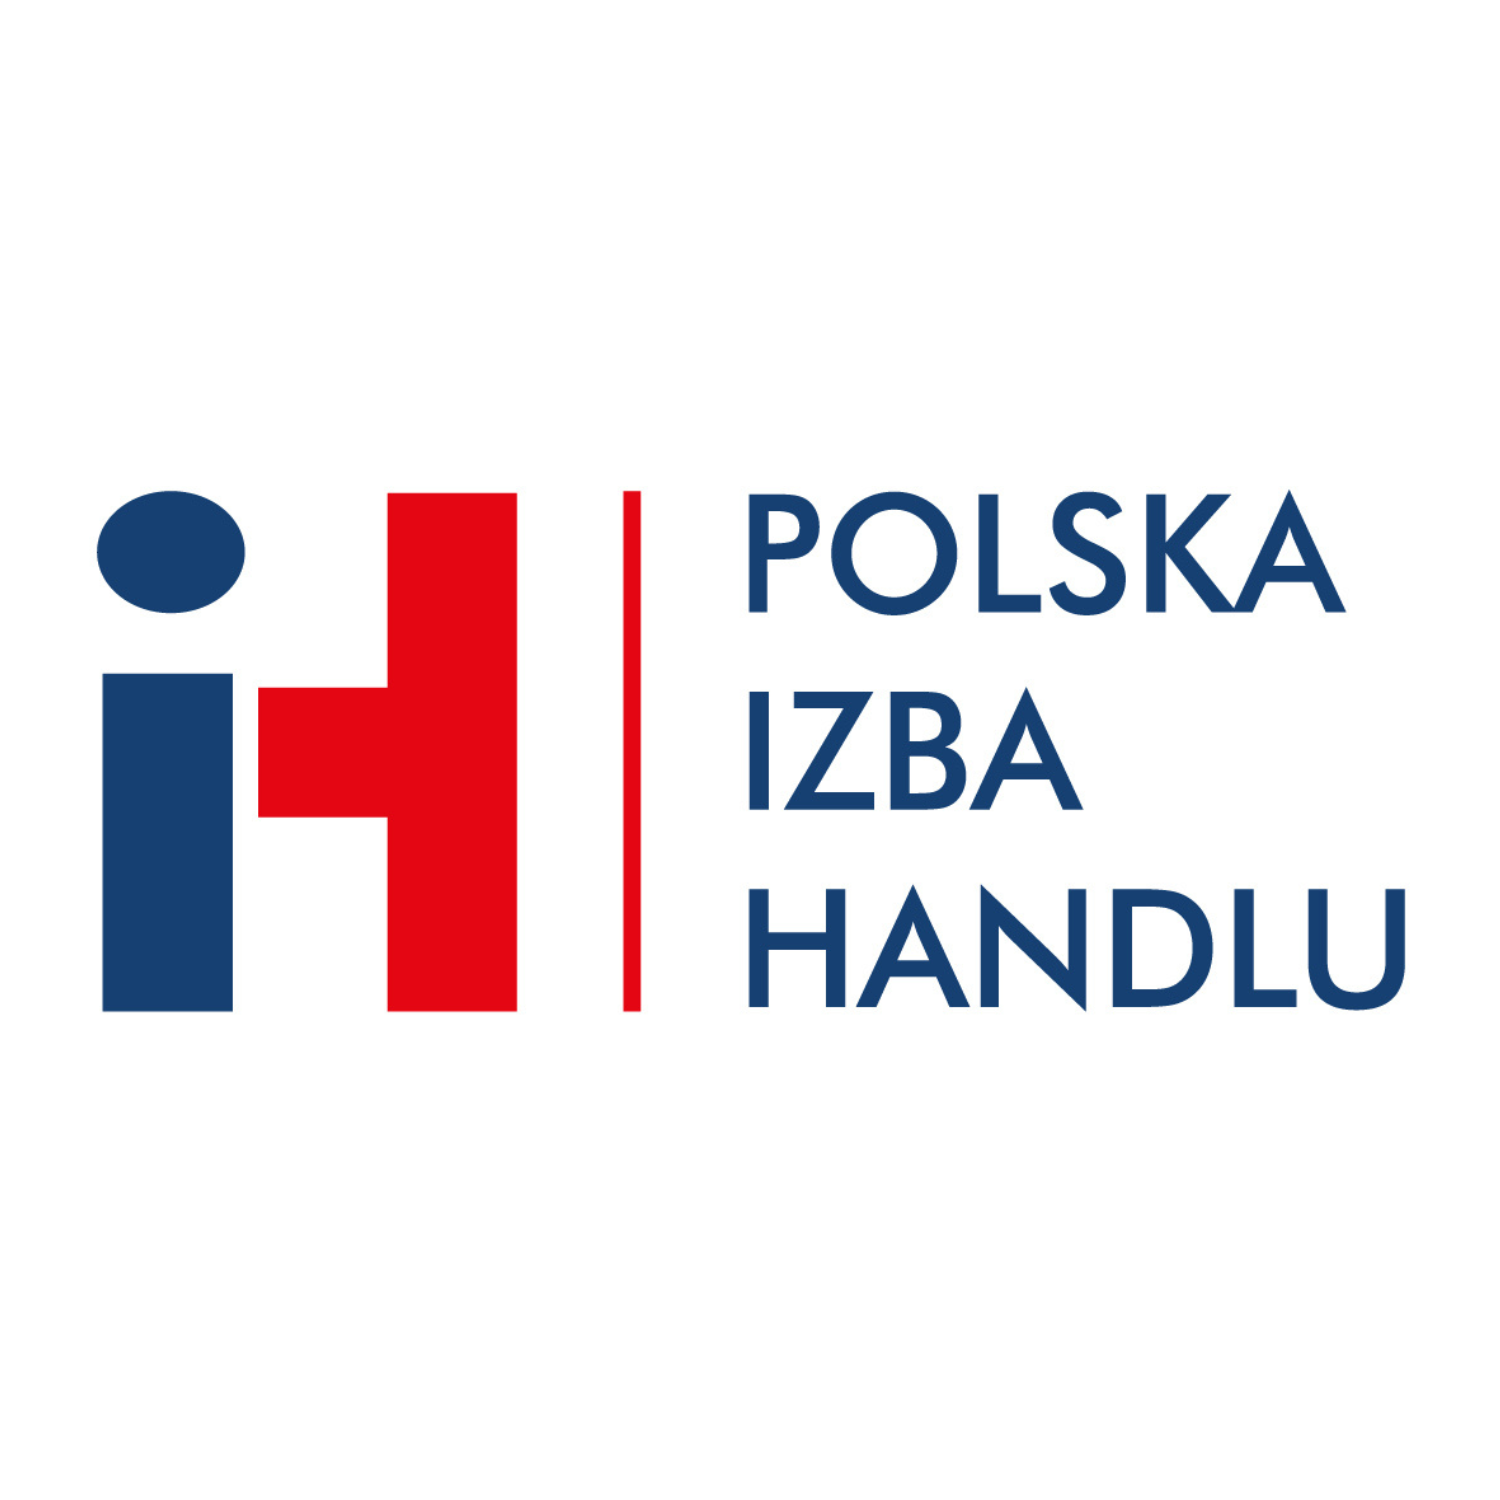 Polska Izba Handlu logo